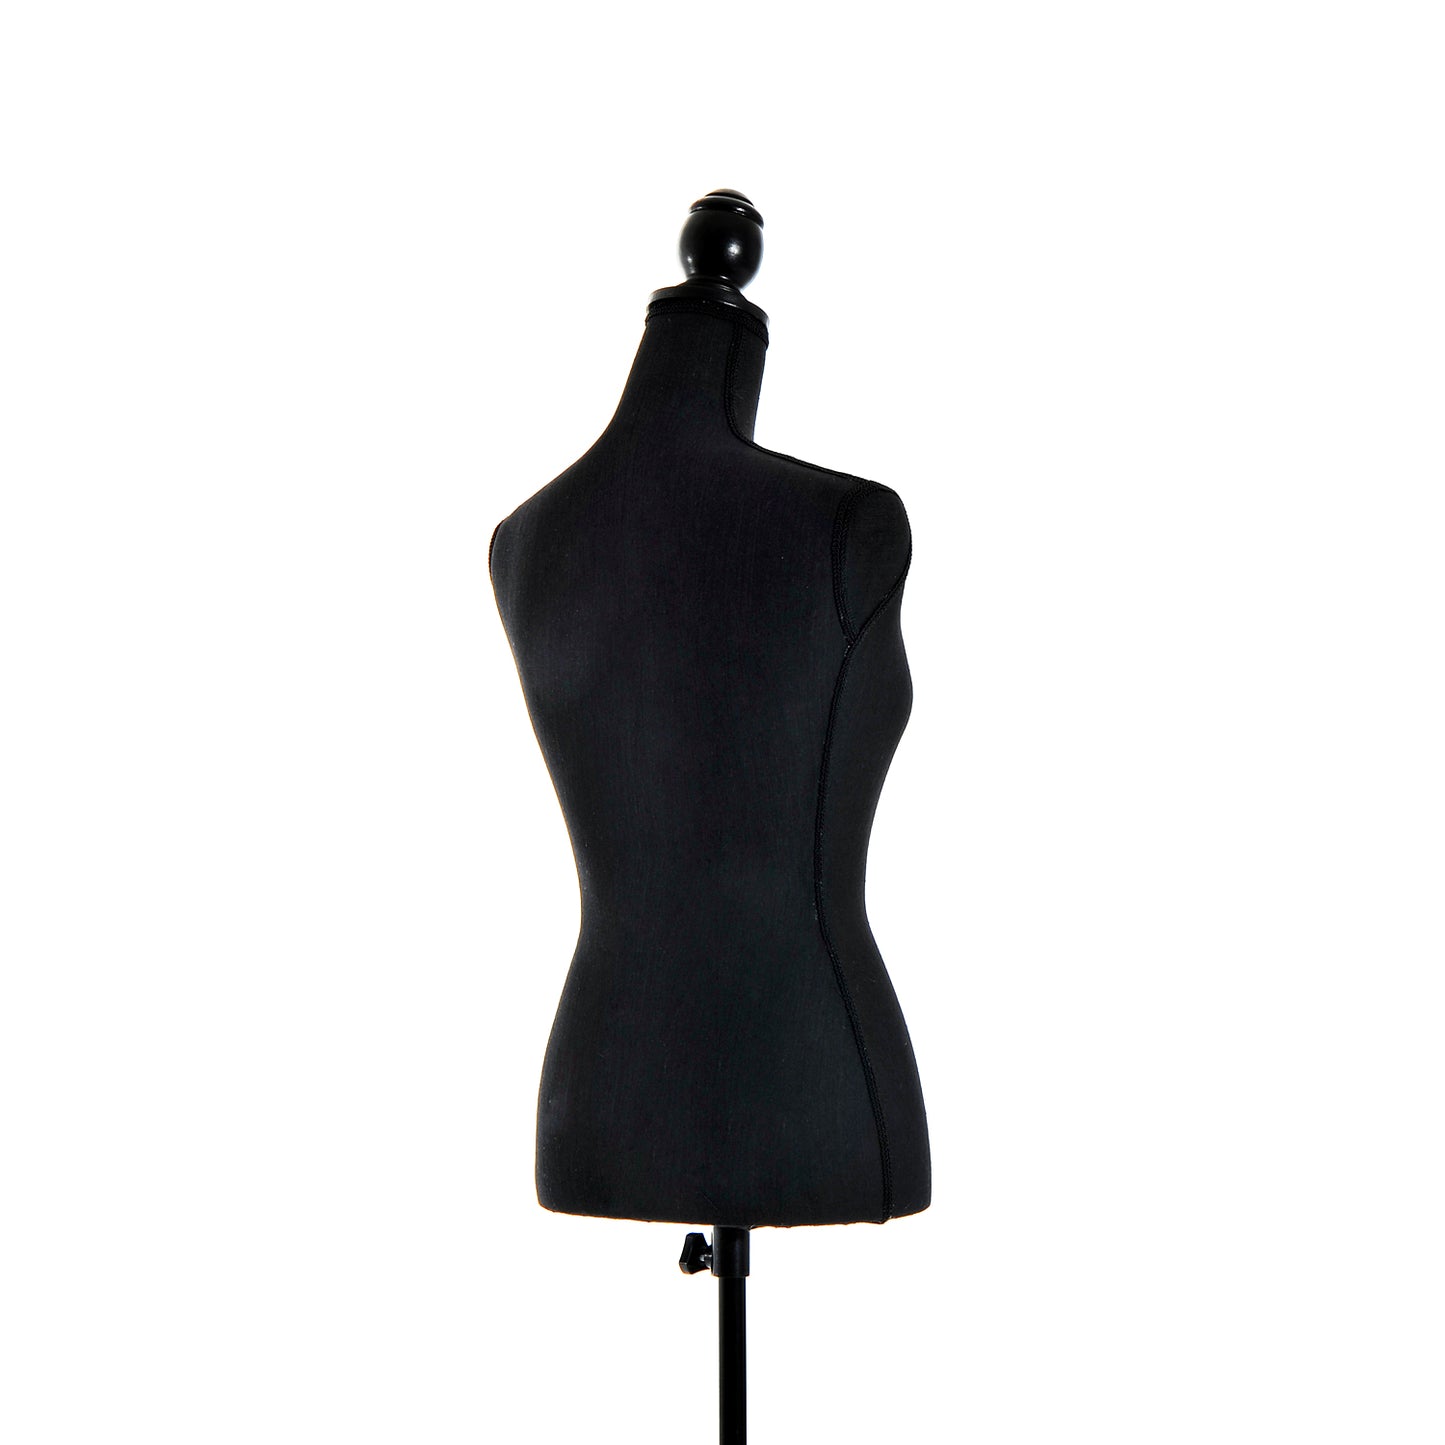 HOMCOM Female Mannequin Torso-Black